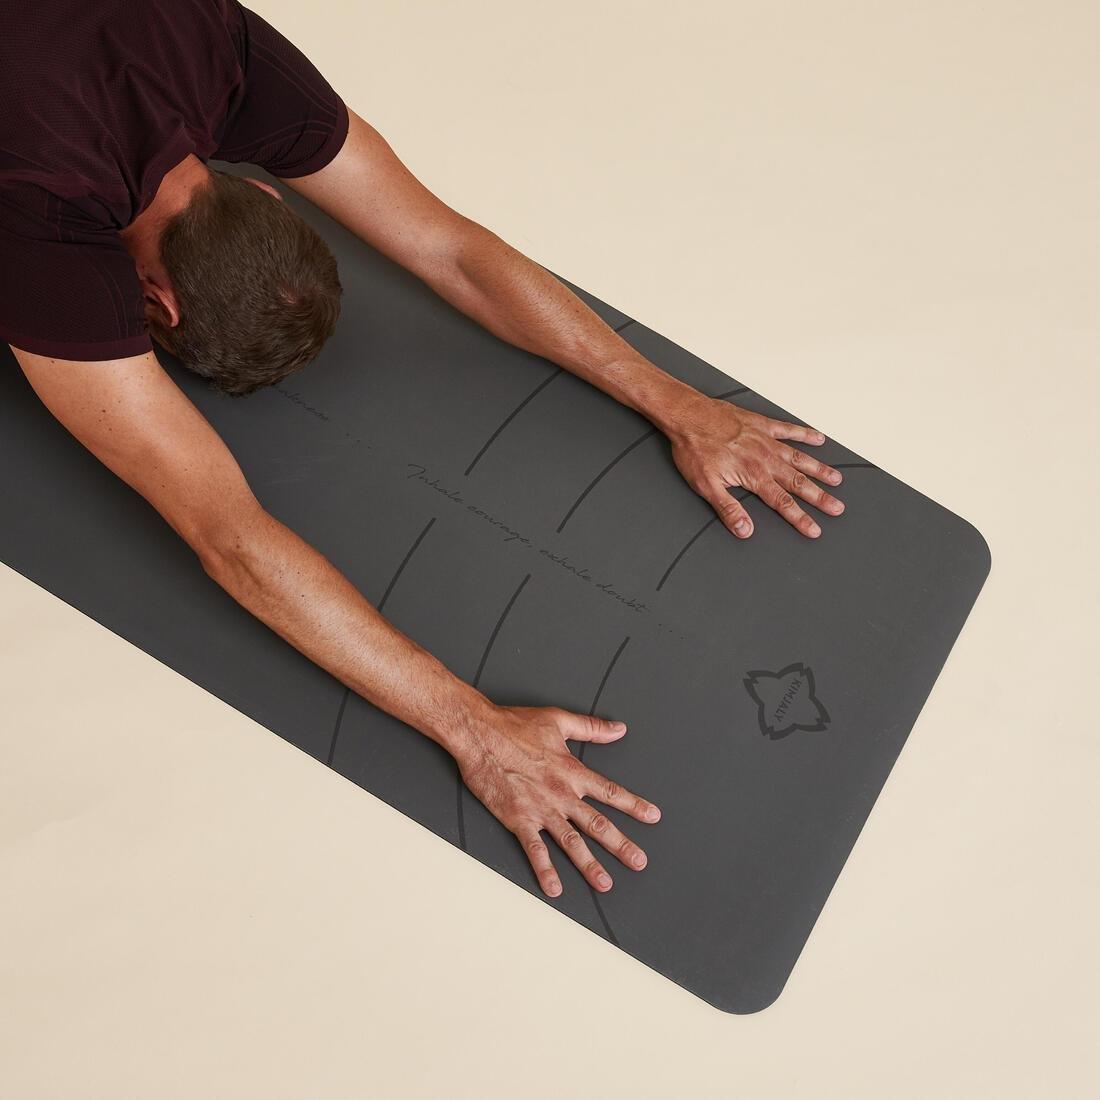 KIMJALY - Yoga Mat Grip +, Maroon